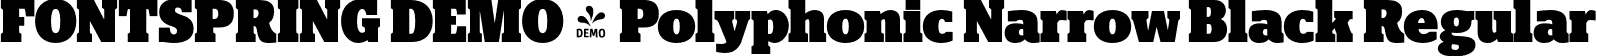 FONTSPRING DEMO - Polyphonic Narrow Black Regular font | Fontspring-DEMO-polyphonic-narrowblack.otf